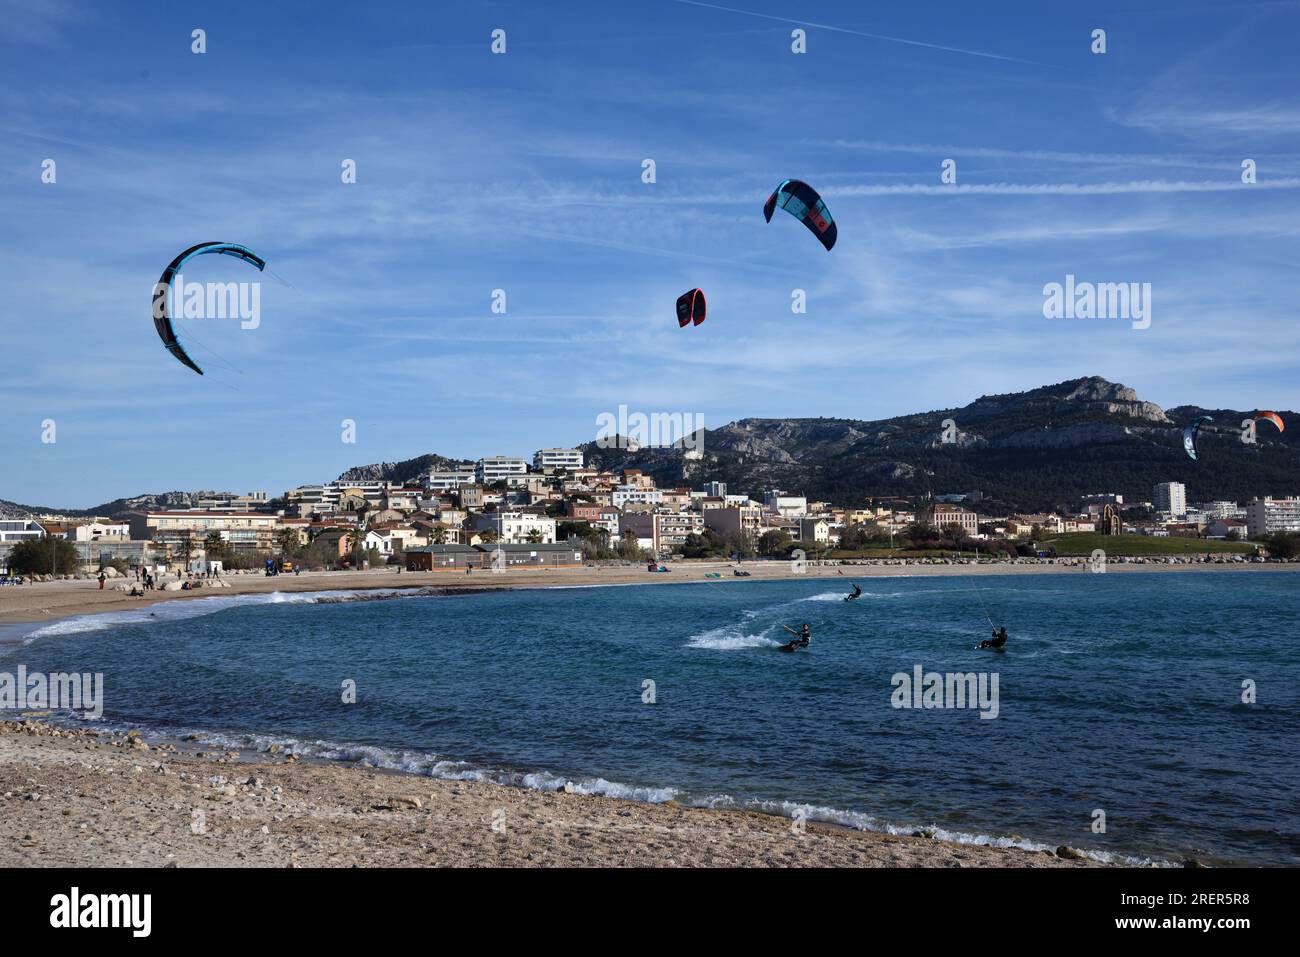 Kiteboarder, Kiteboarders, Kiteboarding or Kitesurfing off Prado Beach on Mediterranean Coast Marseille France Stock Photo